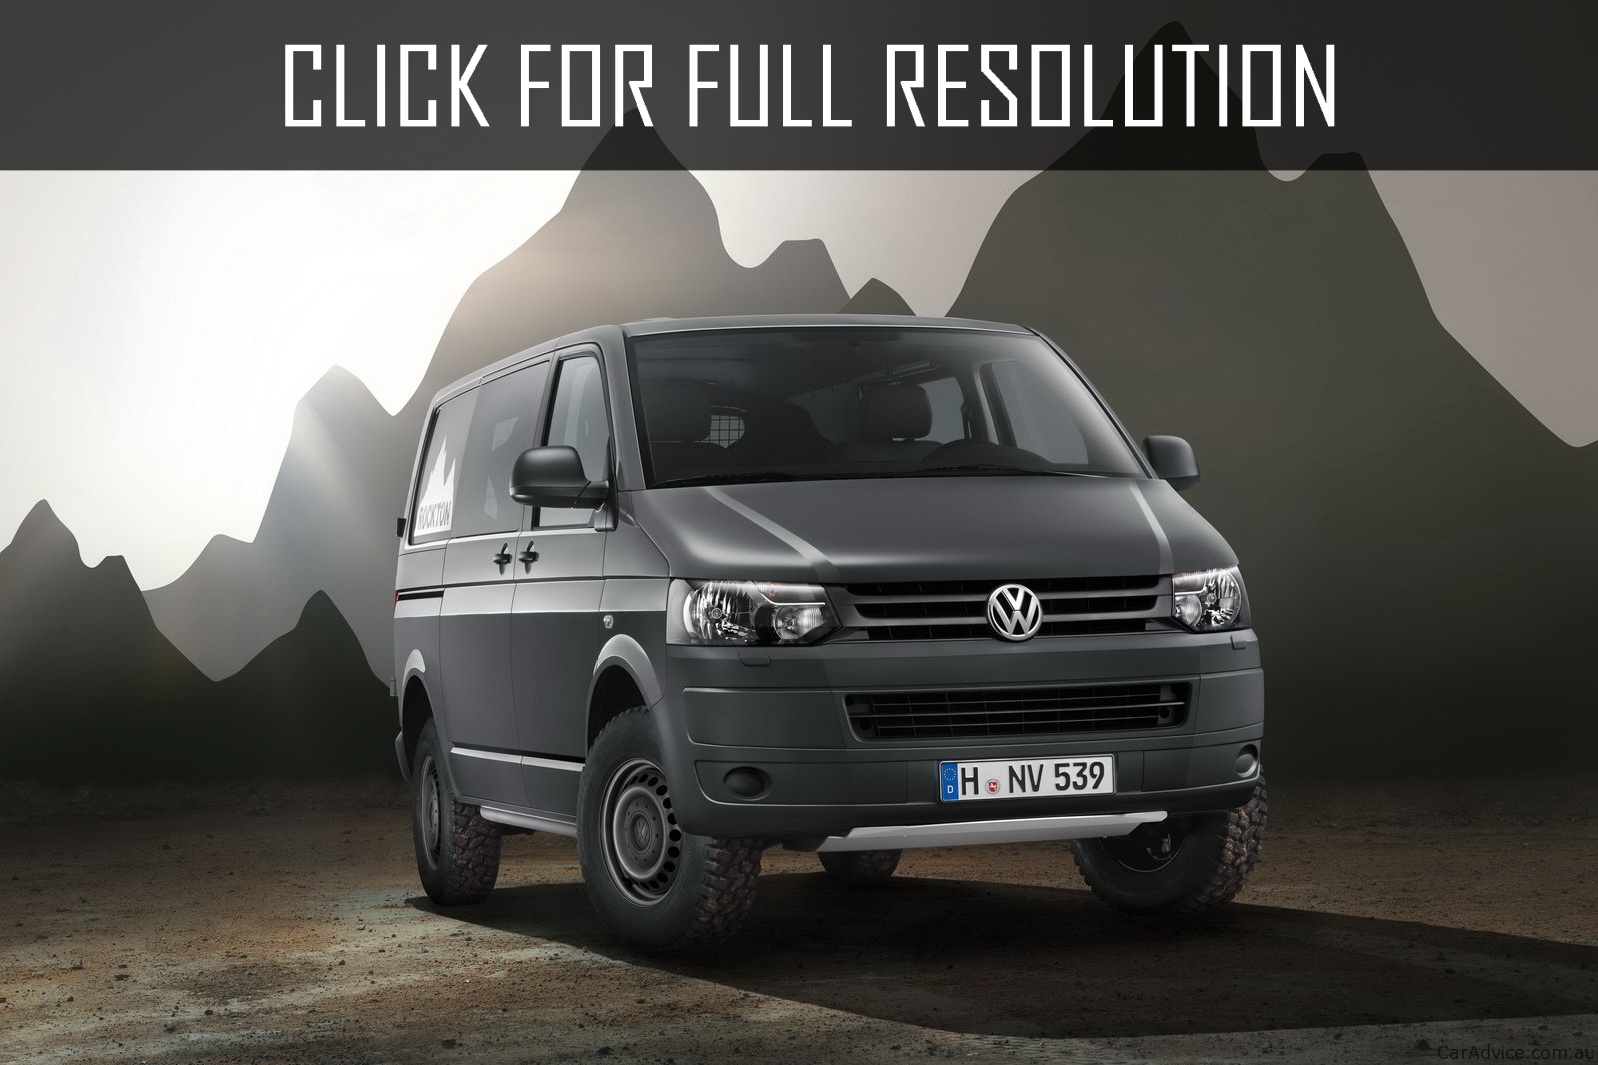 Volkswagen Transporter 4motion